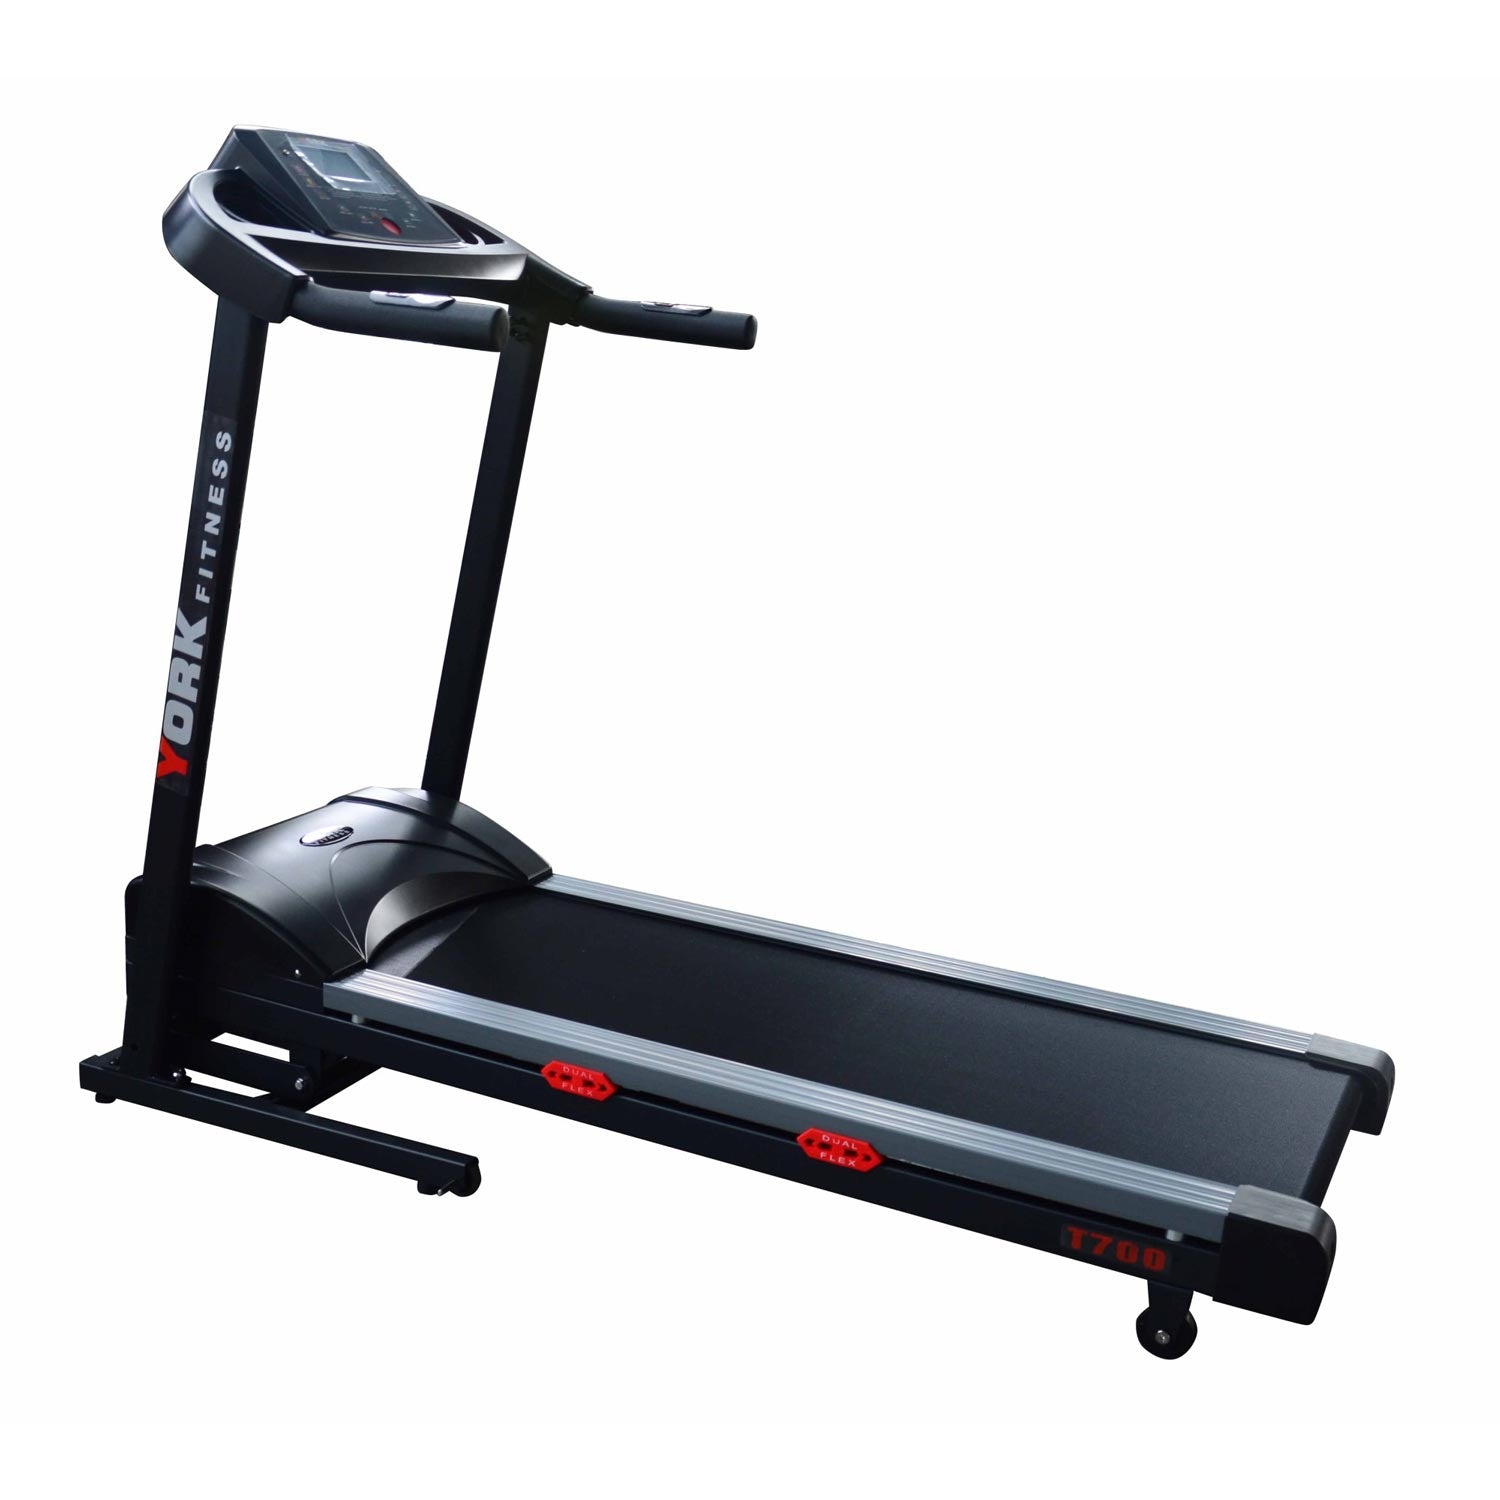 York T700 Treadmill Review